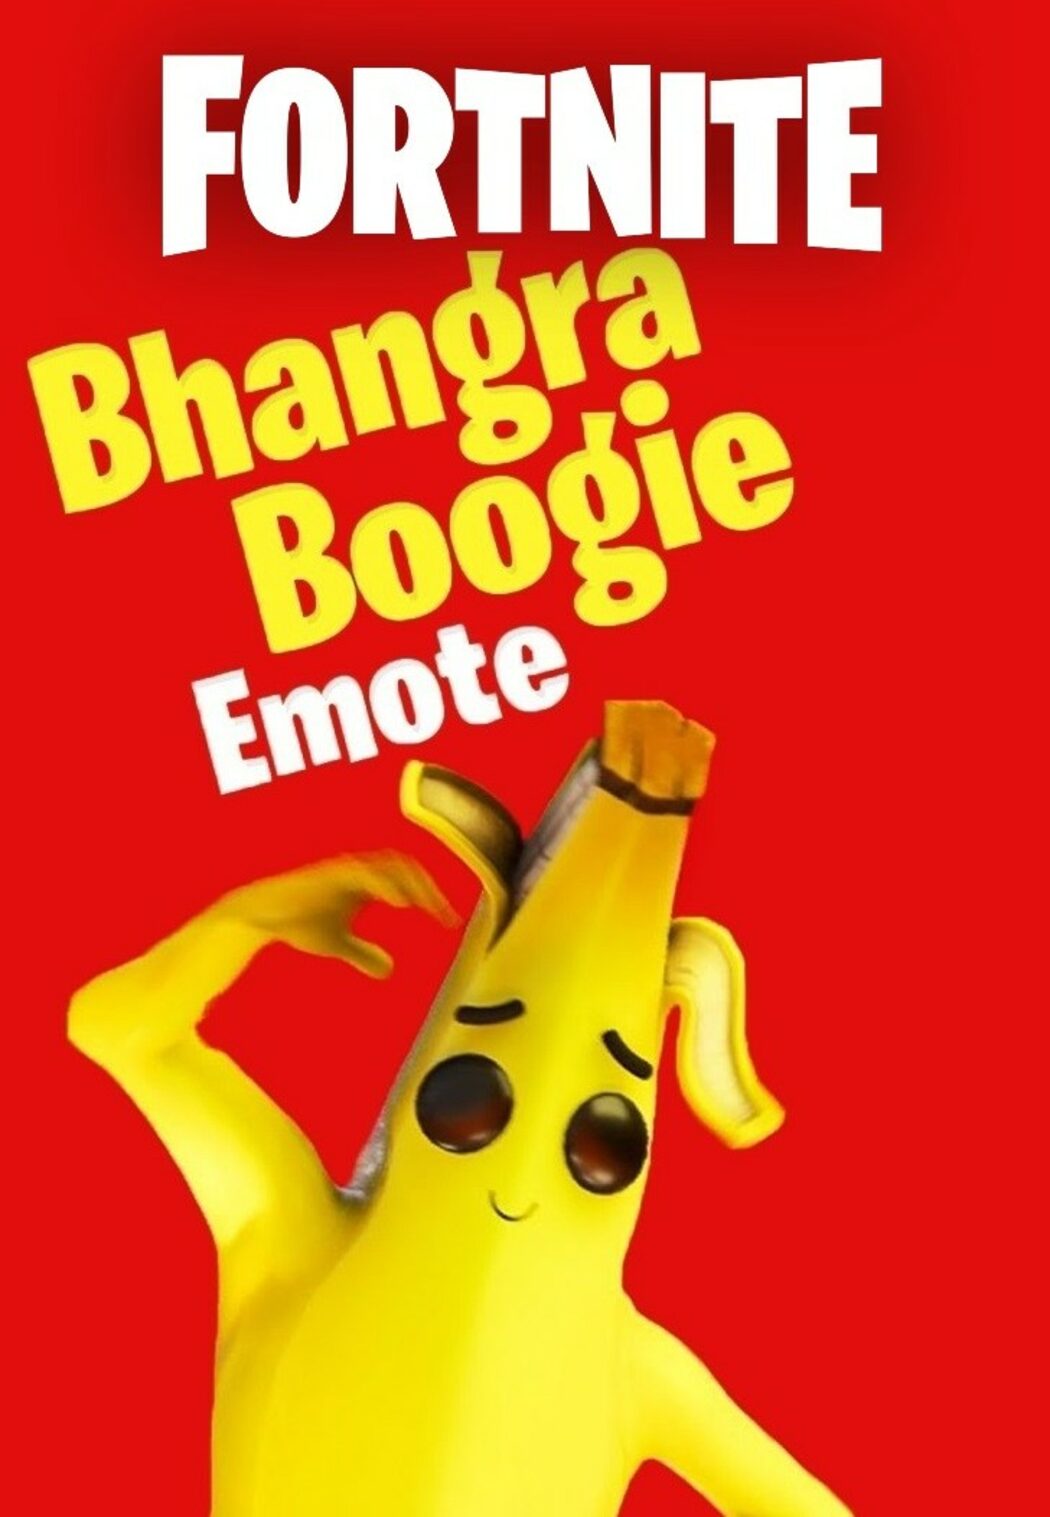 Fortnite Bhangra Boogie Emote Epic Games Key Buy Cheap Eneba